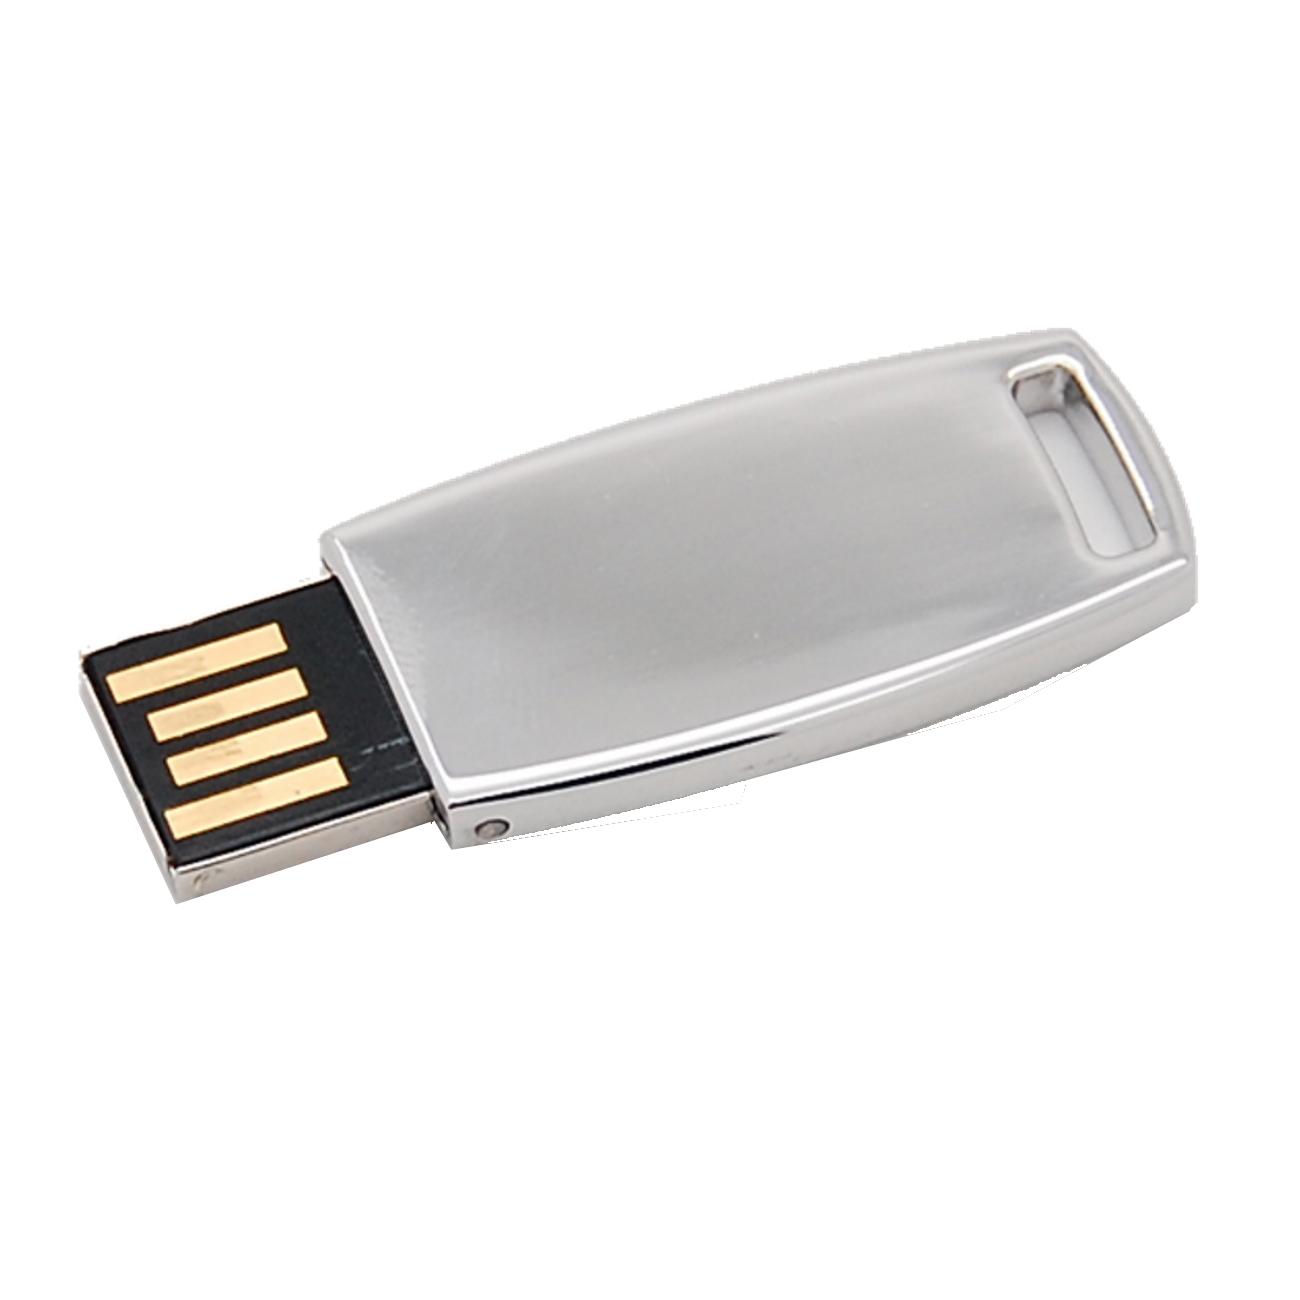 USB GERMANY (Chrome, GB) 2 USB-Stick ®Flat